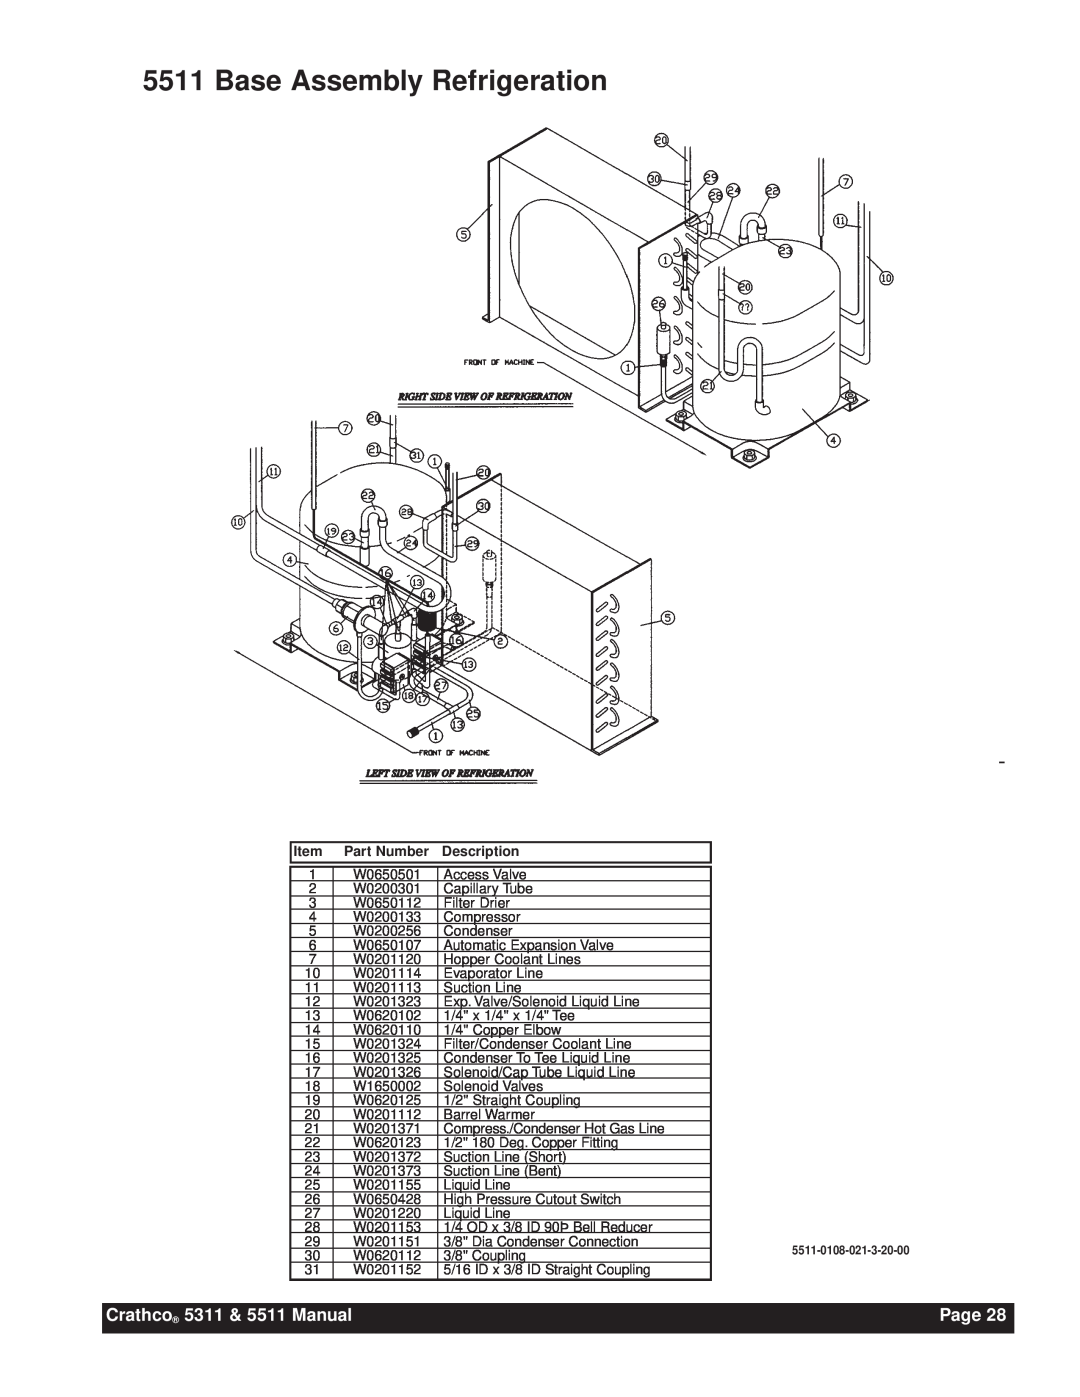 Grindmaster Base Assembly Refrigeration, Crathco 5311 & 5511 Manual, Page, Item, Part Number, Description 